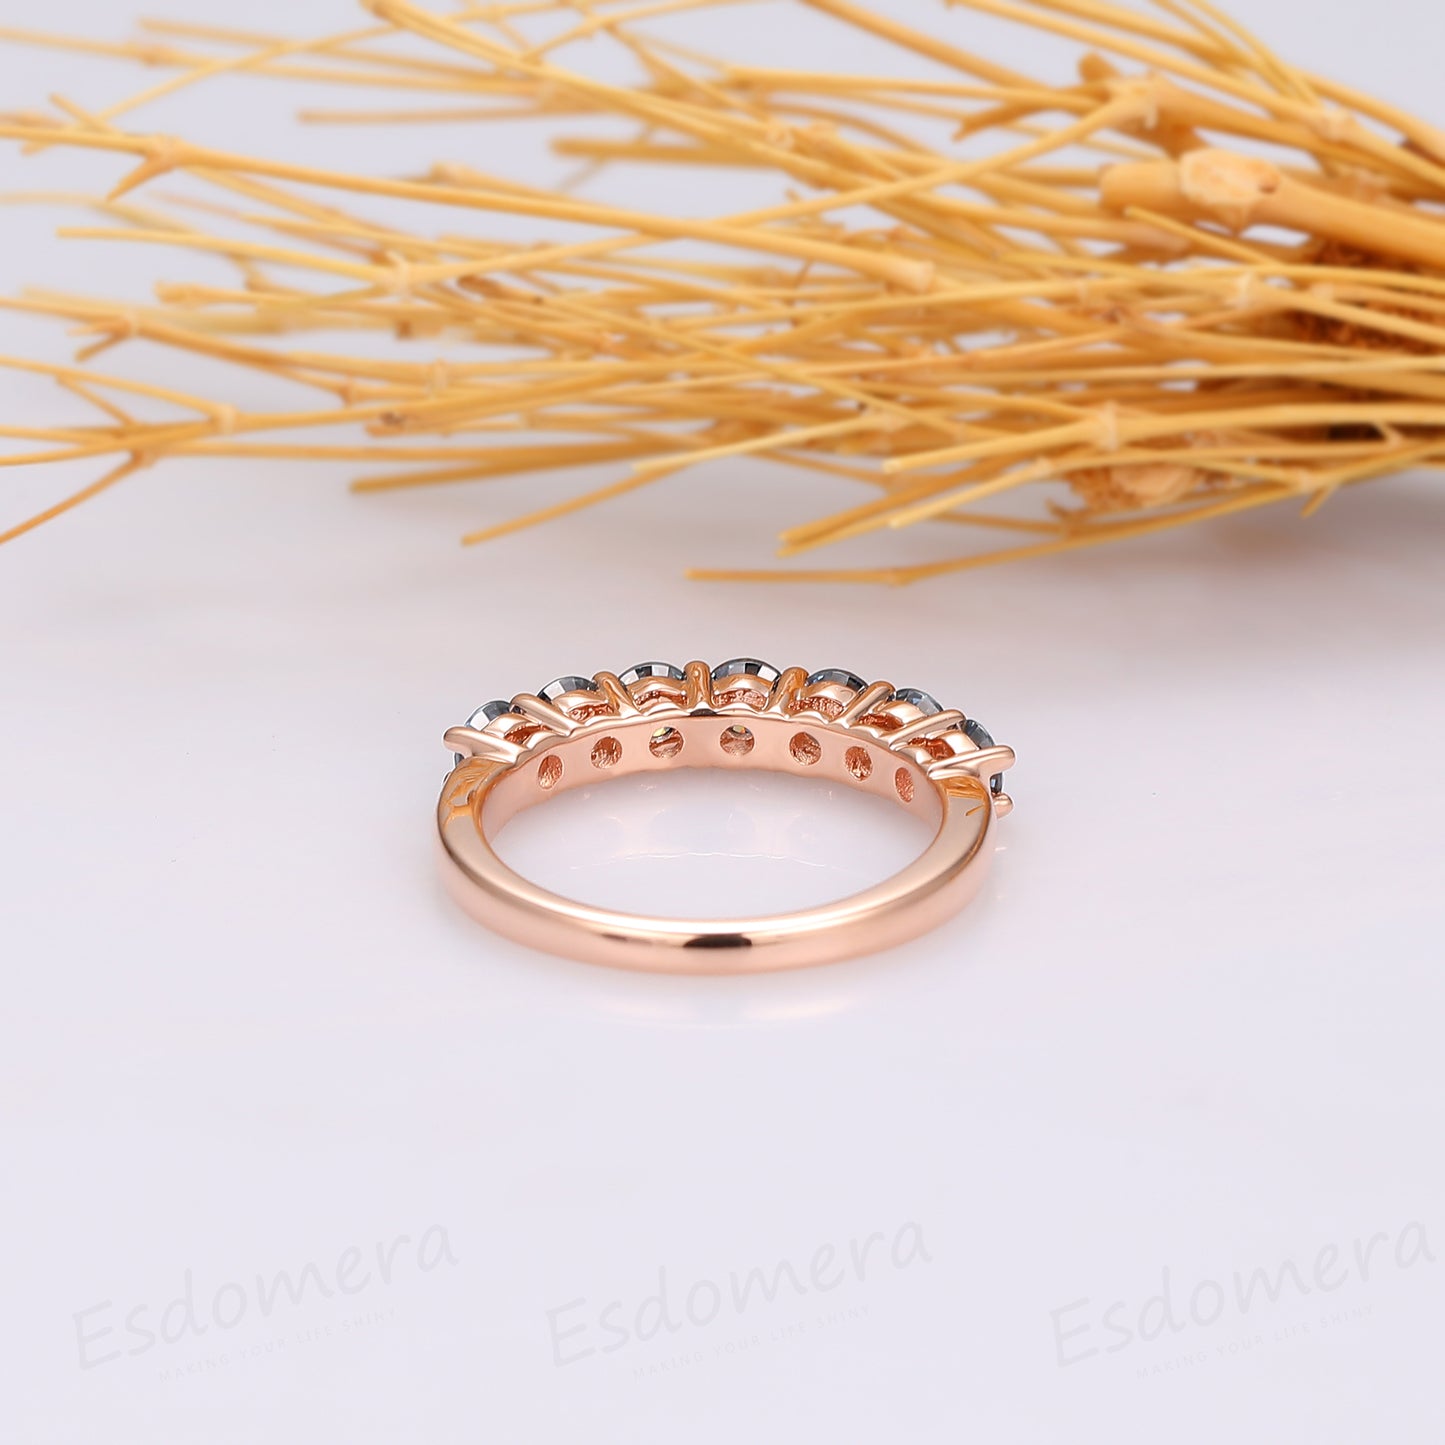 Unique 7 Stone Gray Moissanite Wedding Band, 14K Rose Gold Engagement Ring